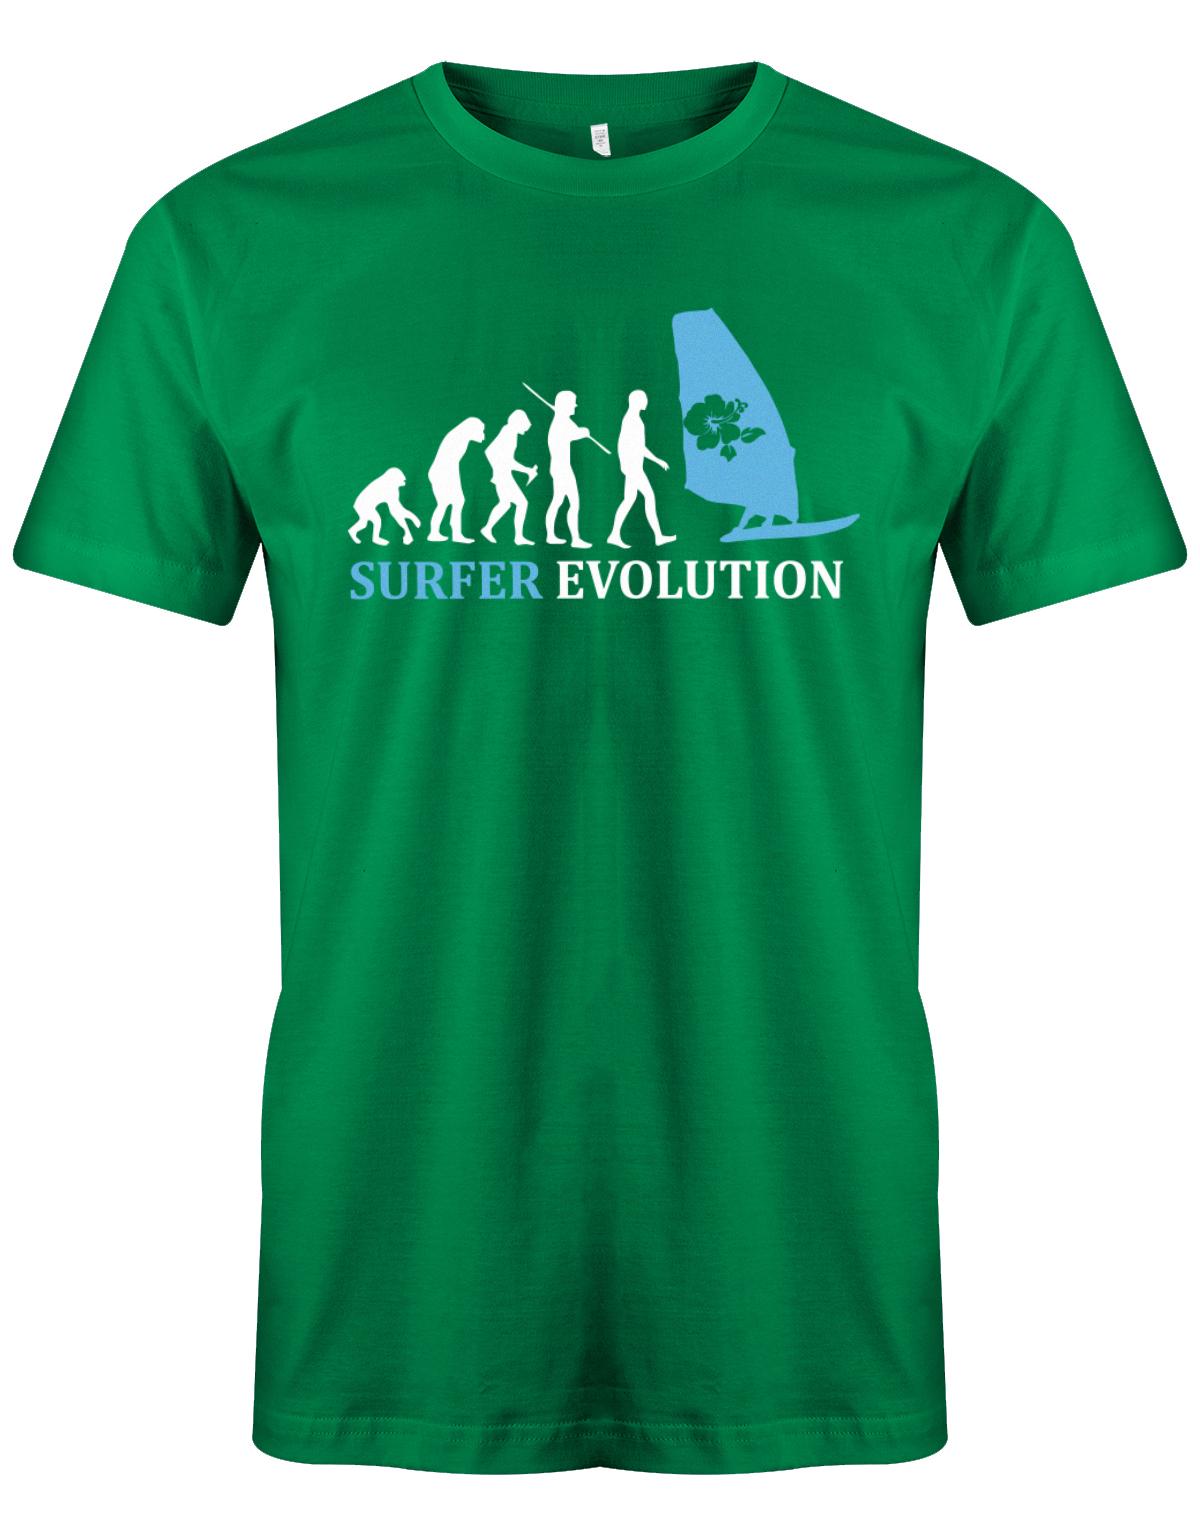 Surfer-Evolution-Surf-Herren-Shirt-Gr-n